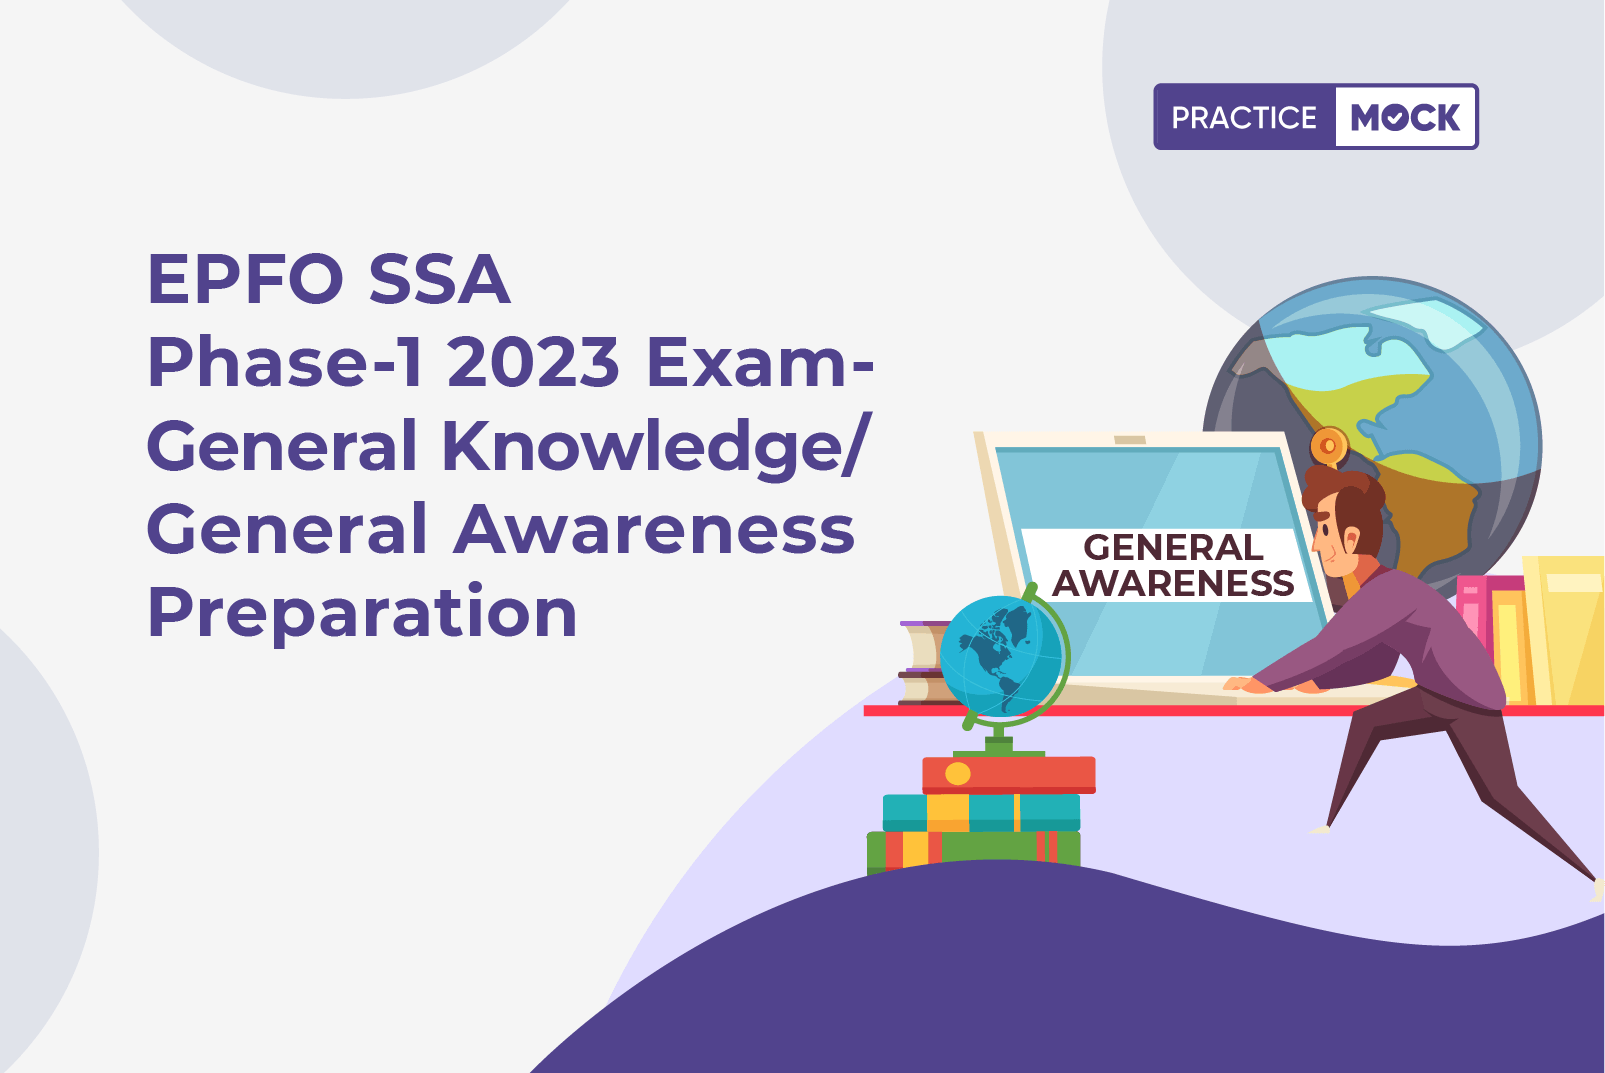 EPFO SSA Phase 1 2023 Exam-General Knowledge/General Awareness Preparation